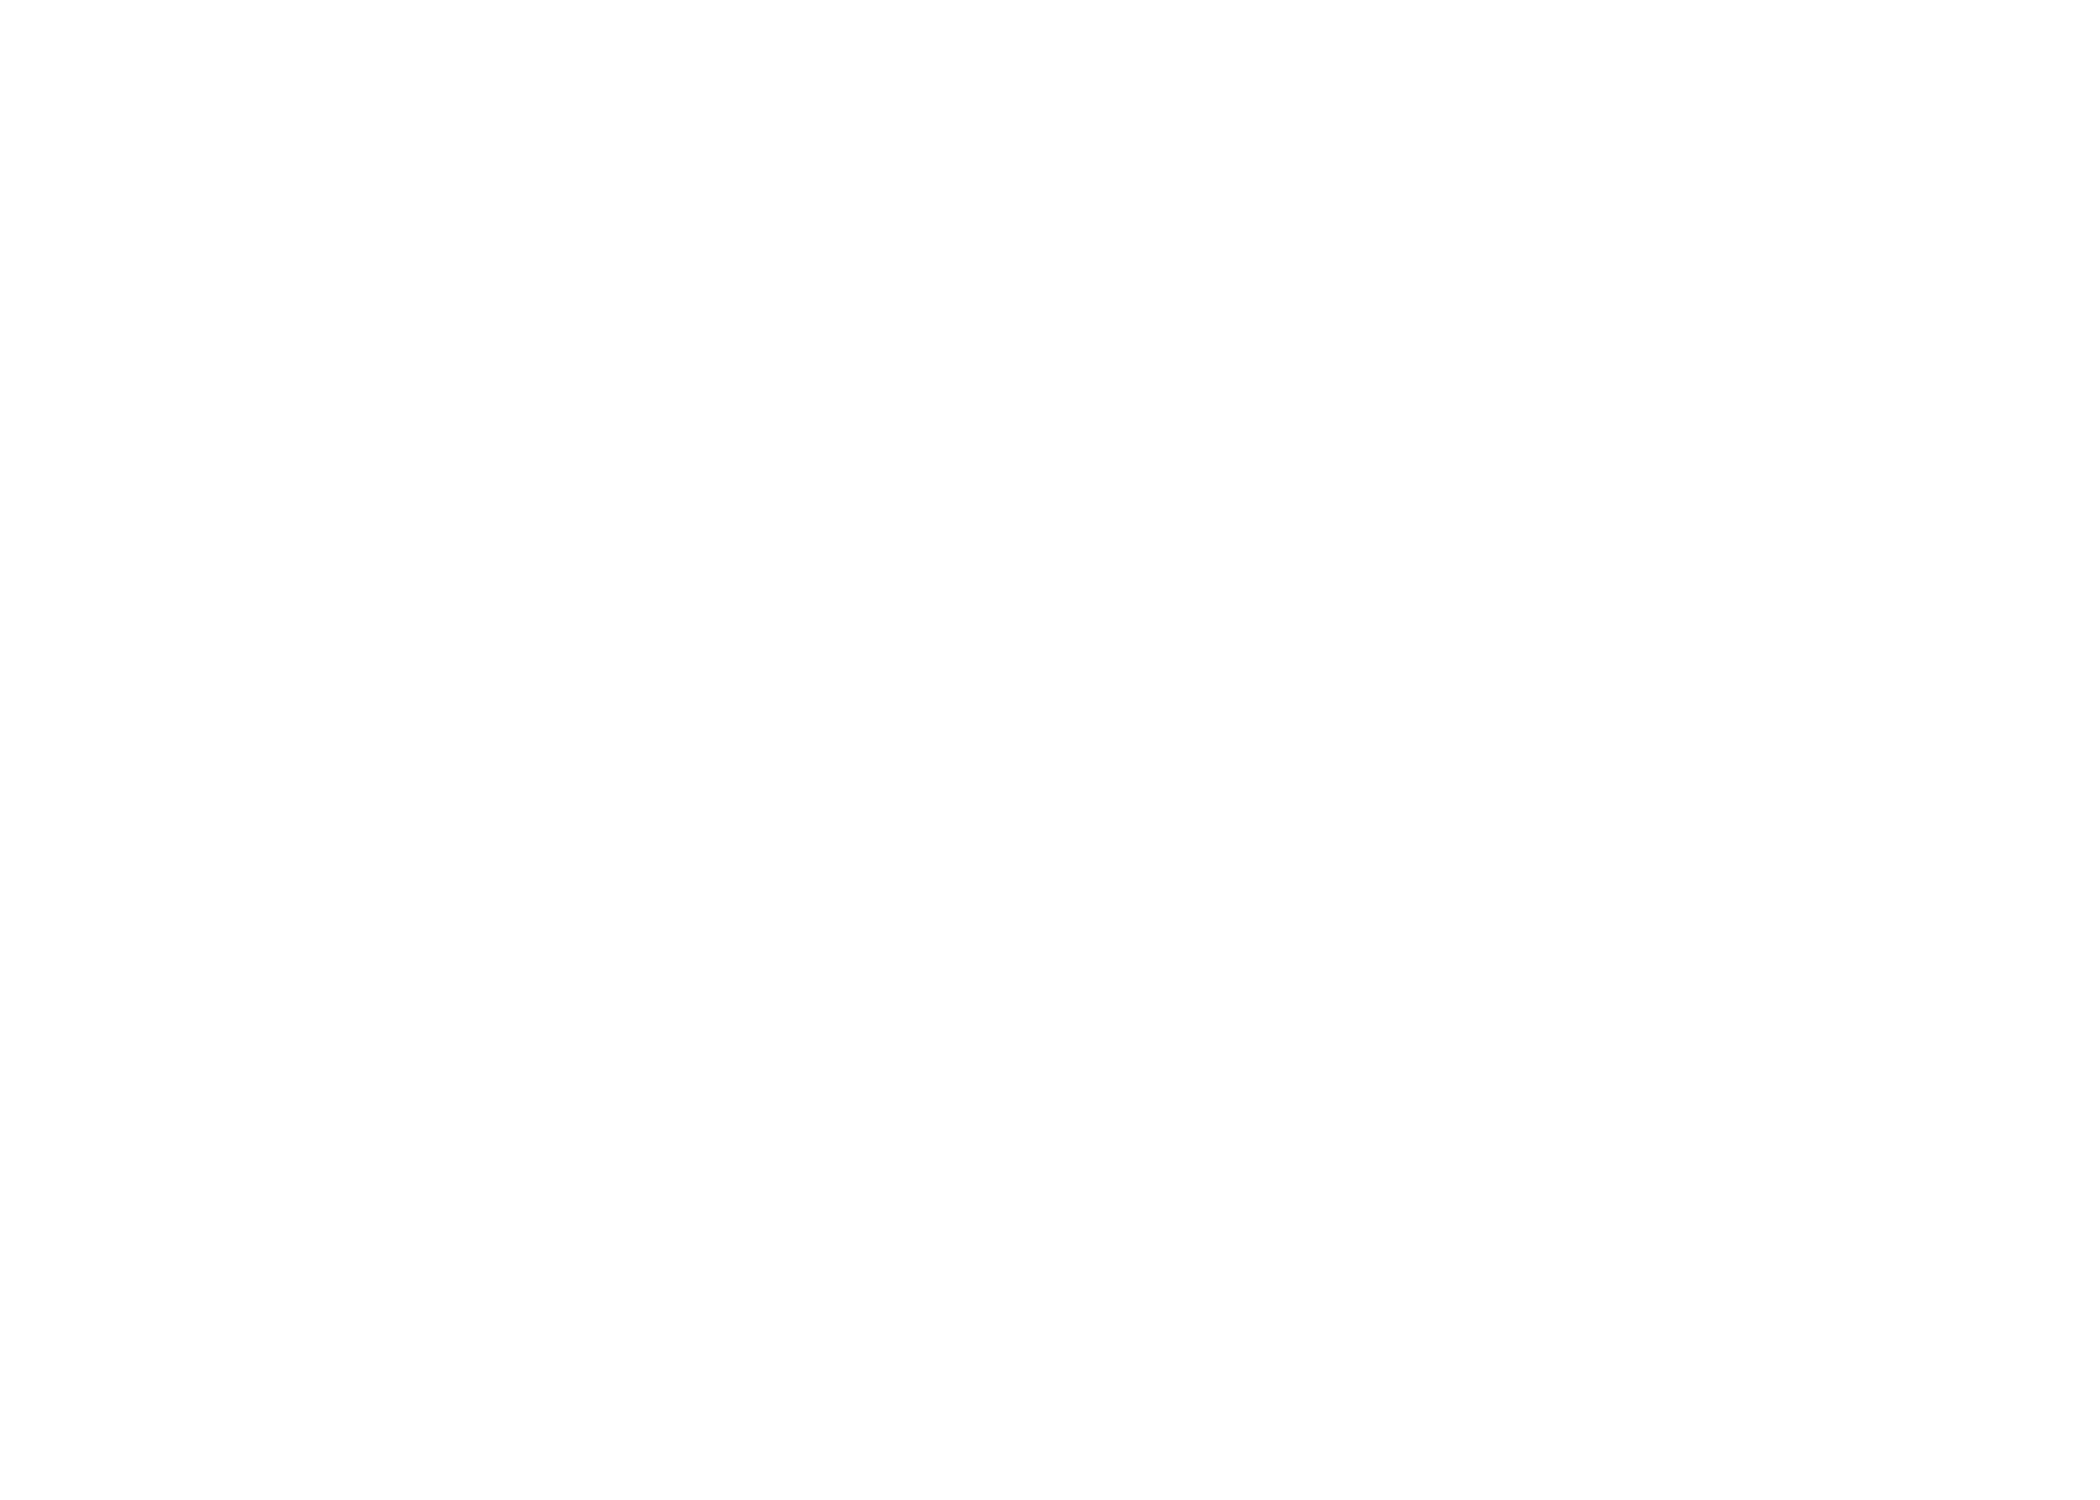 Hoji